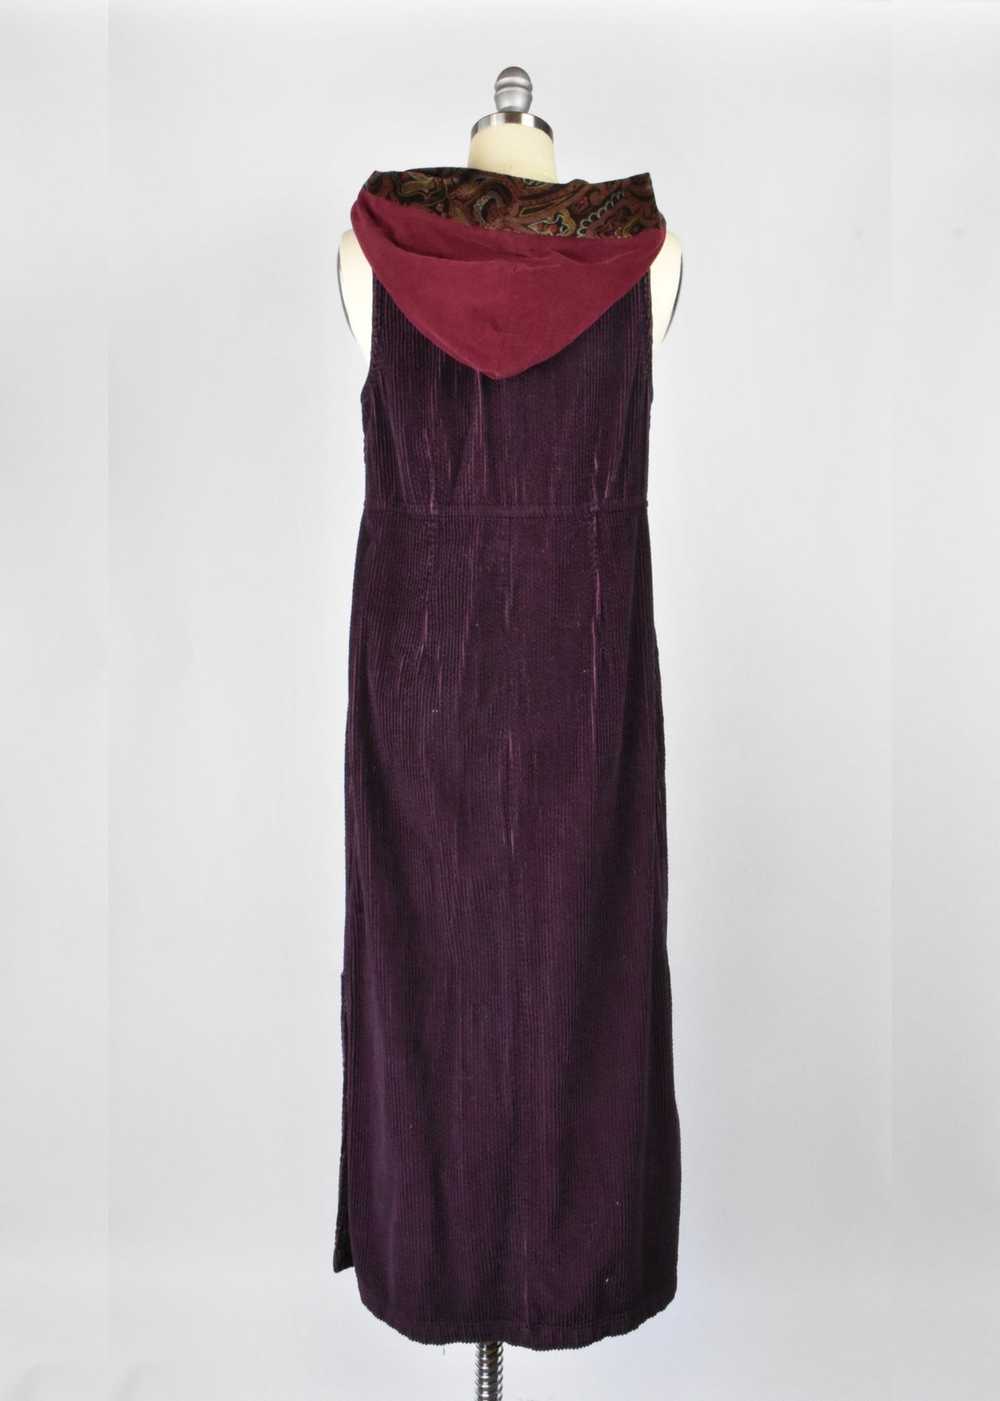 1990's Sleeveless Corduroy Dress with Hood - image 5